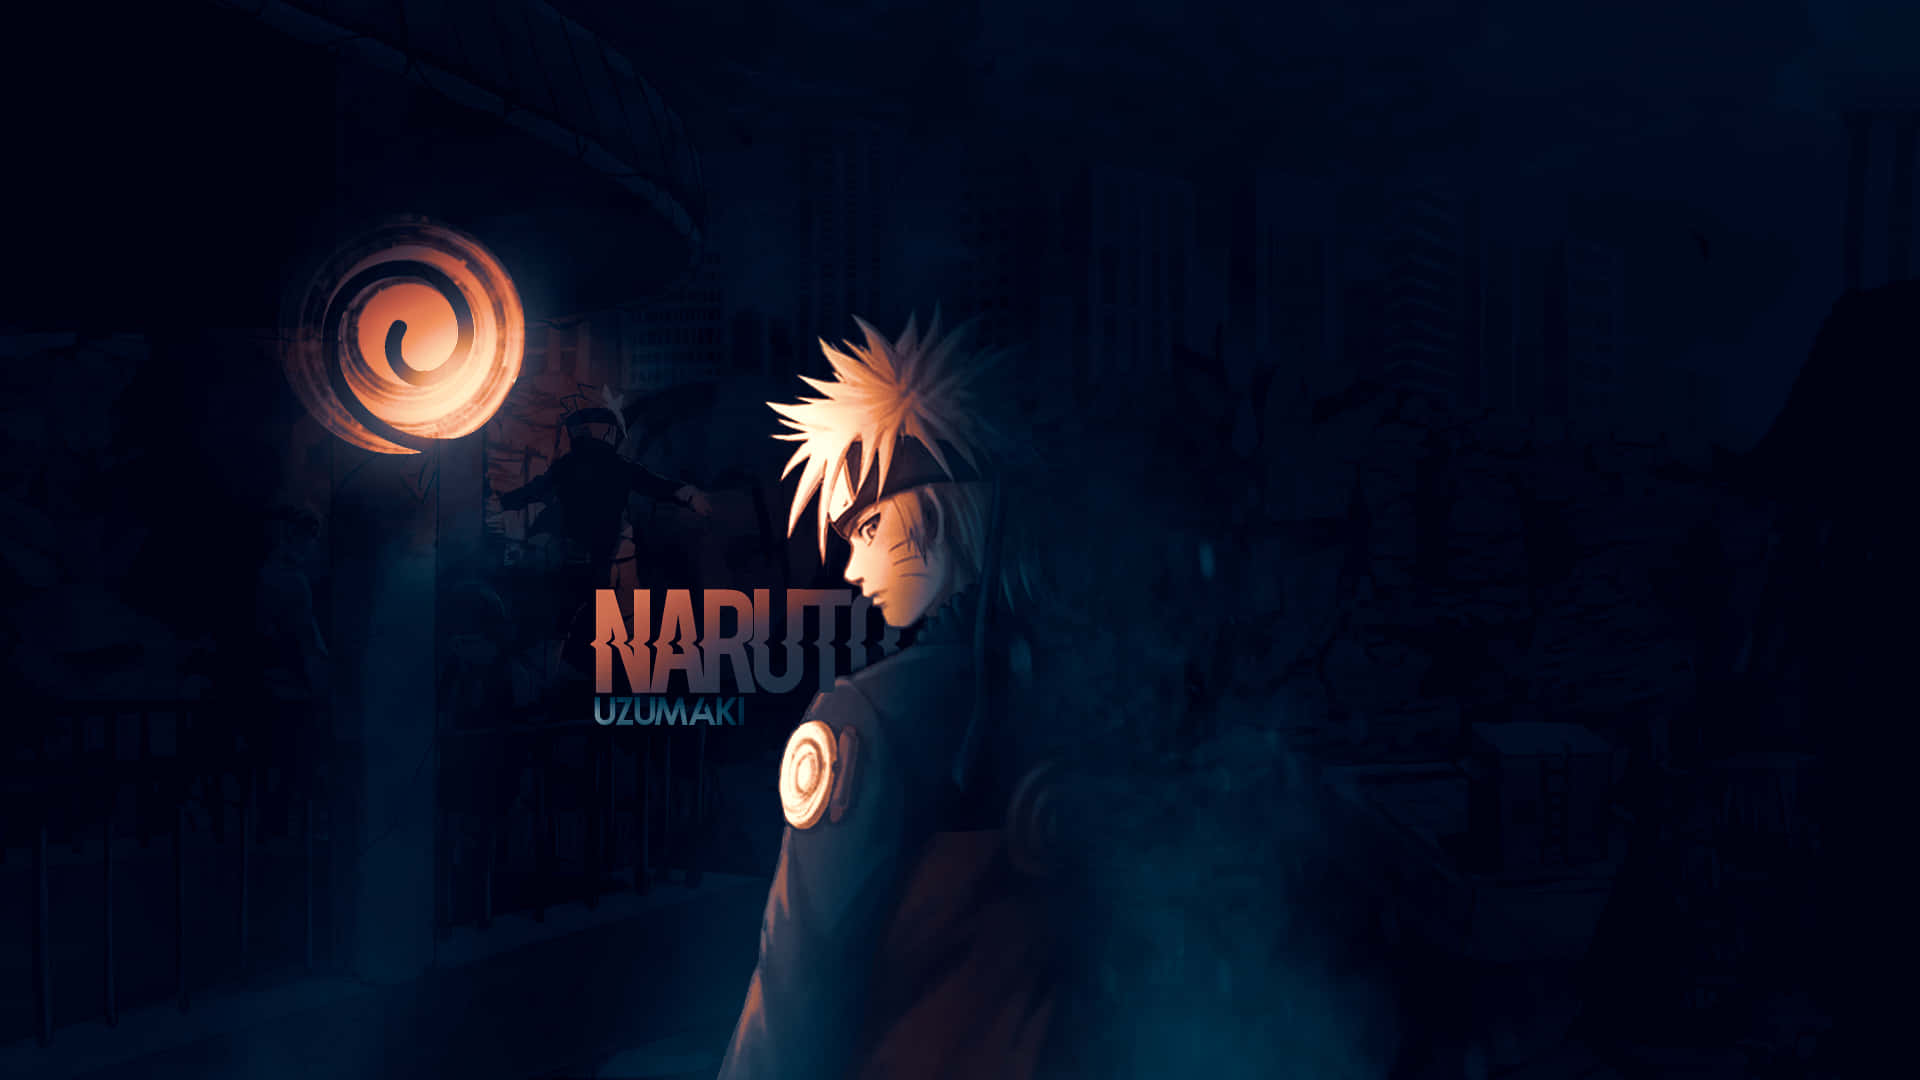 Download this Cool Naruto Desktop Wallpaper to Brighten Up Your Screens Wallpaper